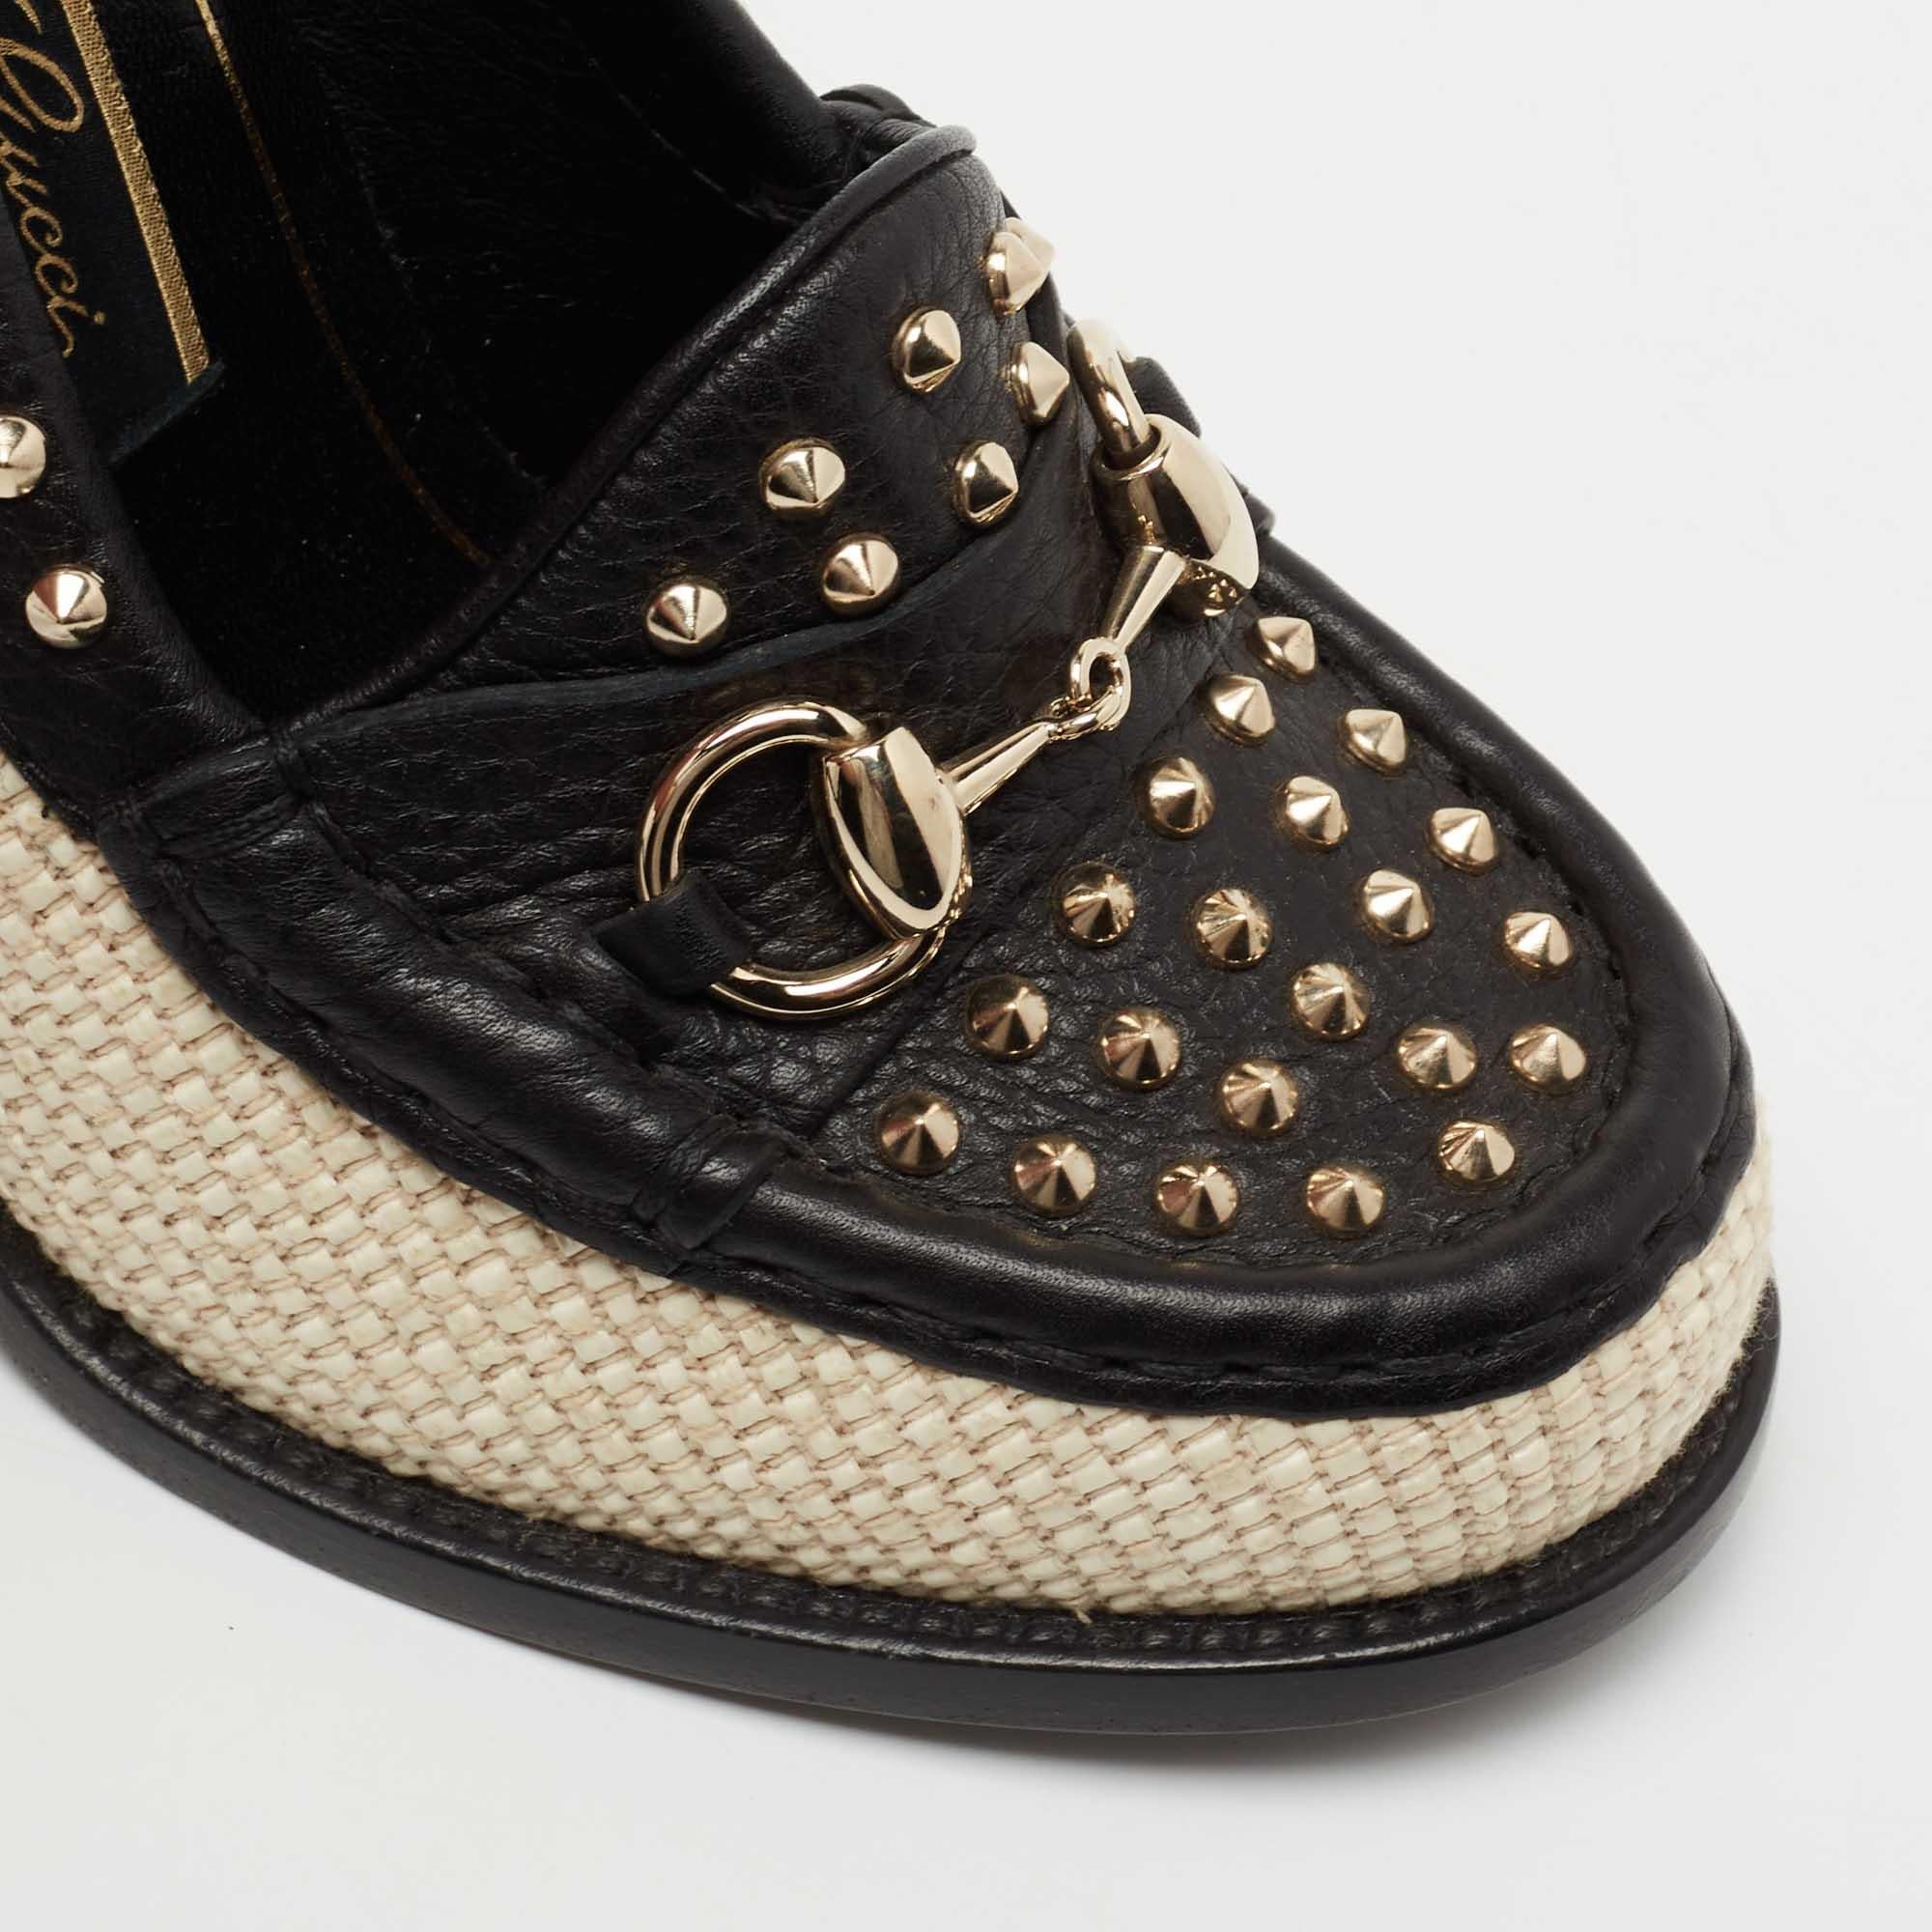 Women's Gucci Black/Cream Leather Straw Studded Horsebit Alyssa Loafer Pumps Size 36.5